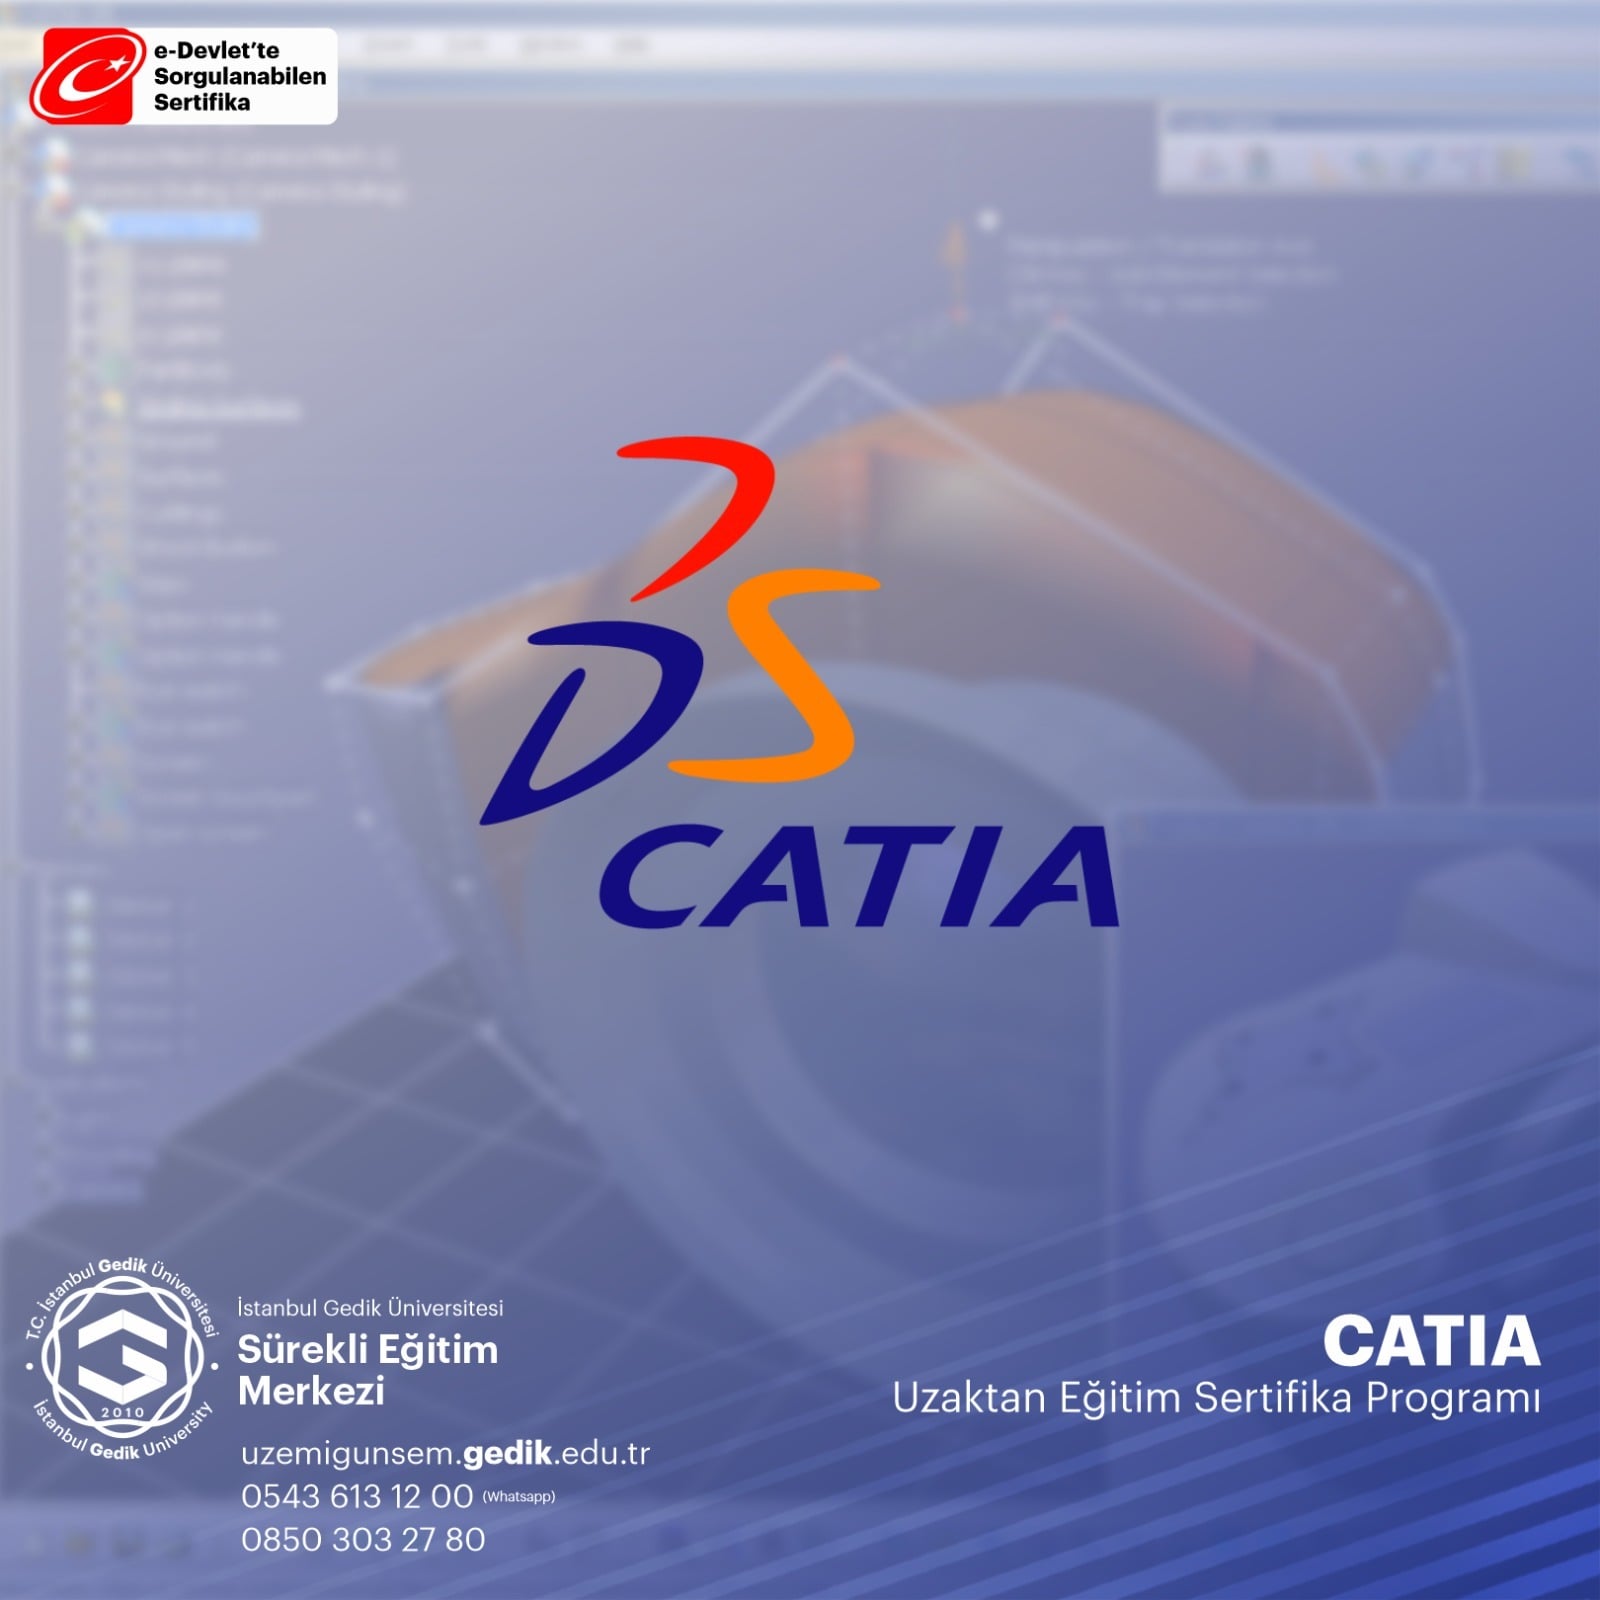 Catia V5R20 Eğitimi Sertifika Programı